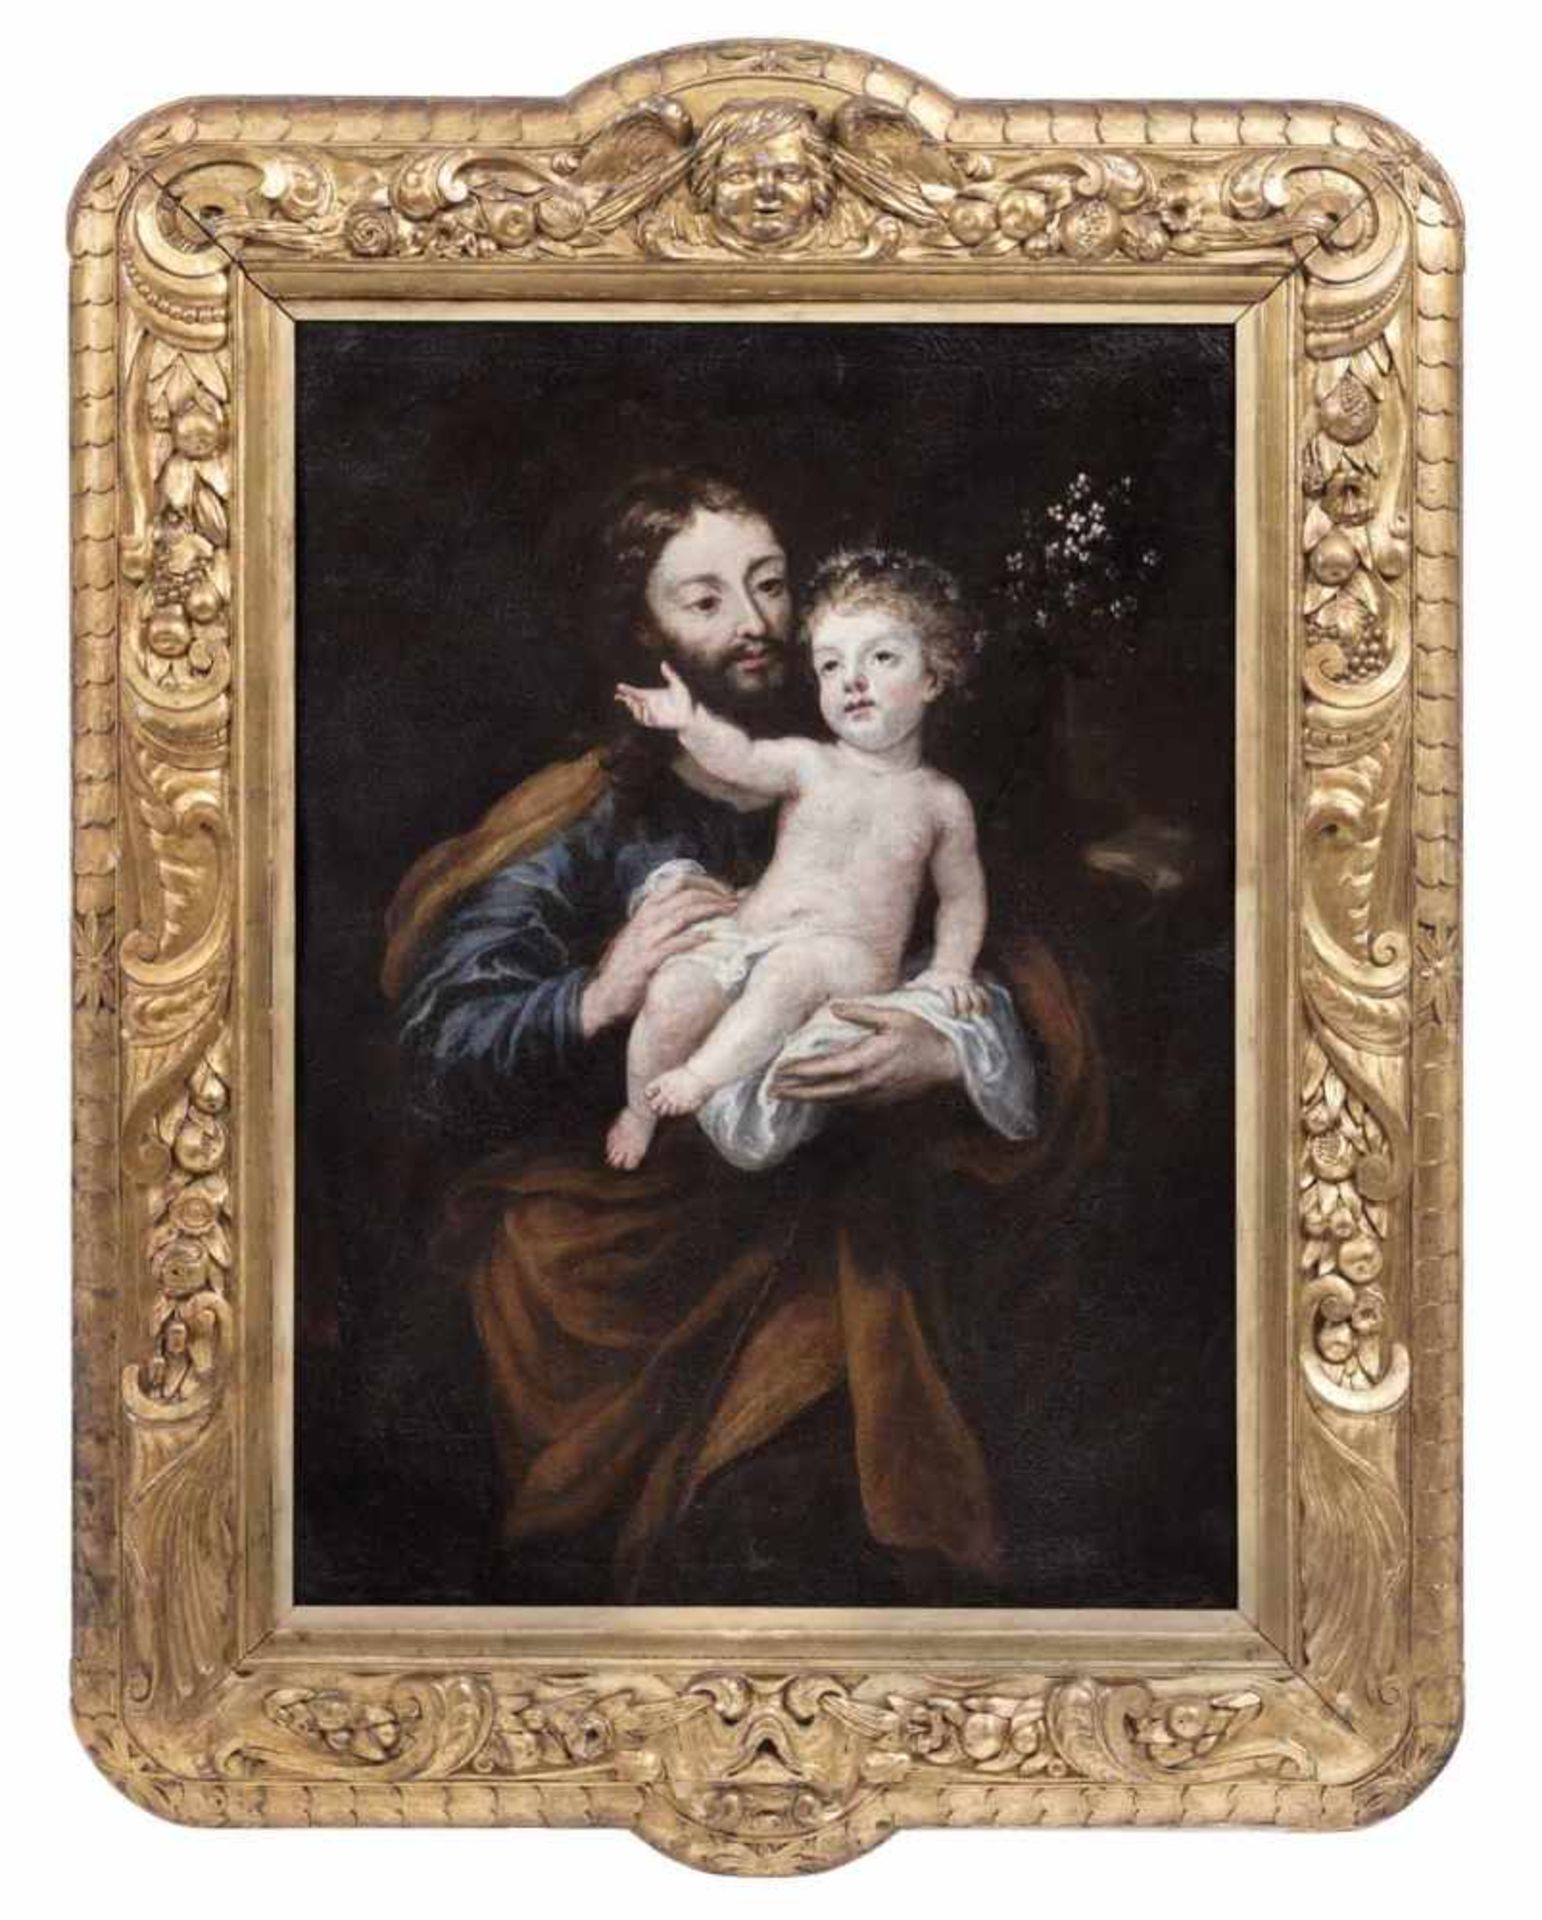 Ricci, Fray Juan AndrésMadrid 1600 - Montecassino 1681107 x 76 cmDer heilige Jospeh mit dem